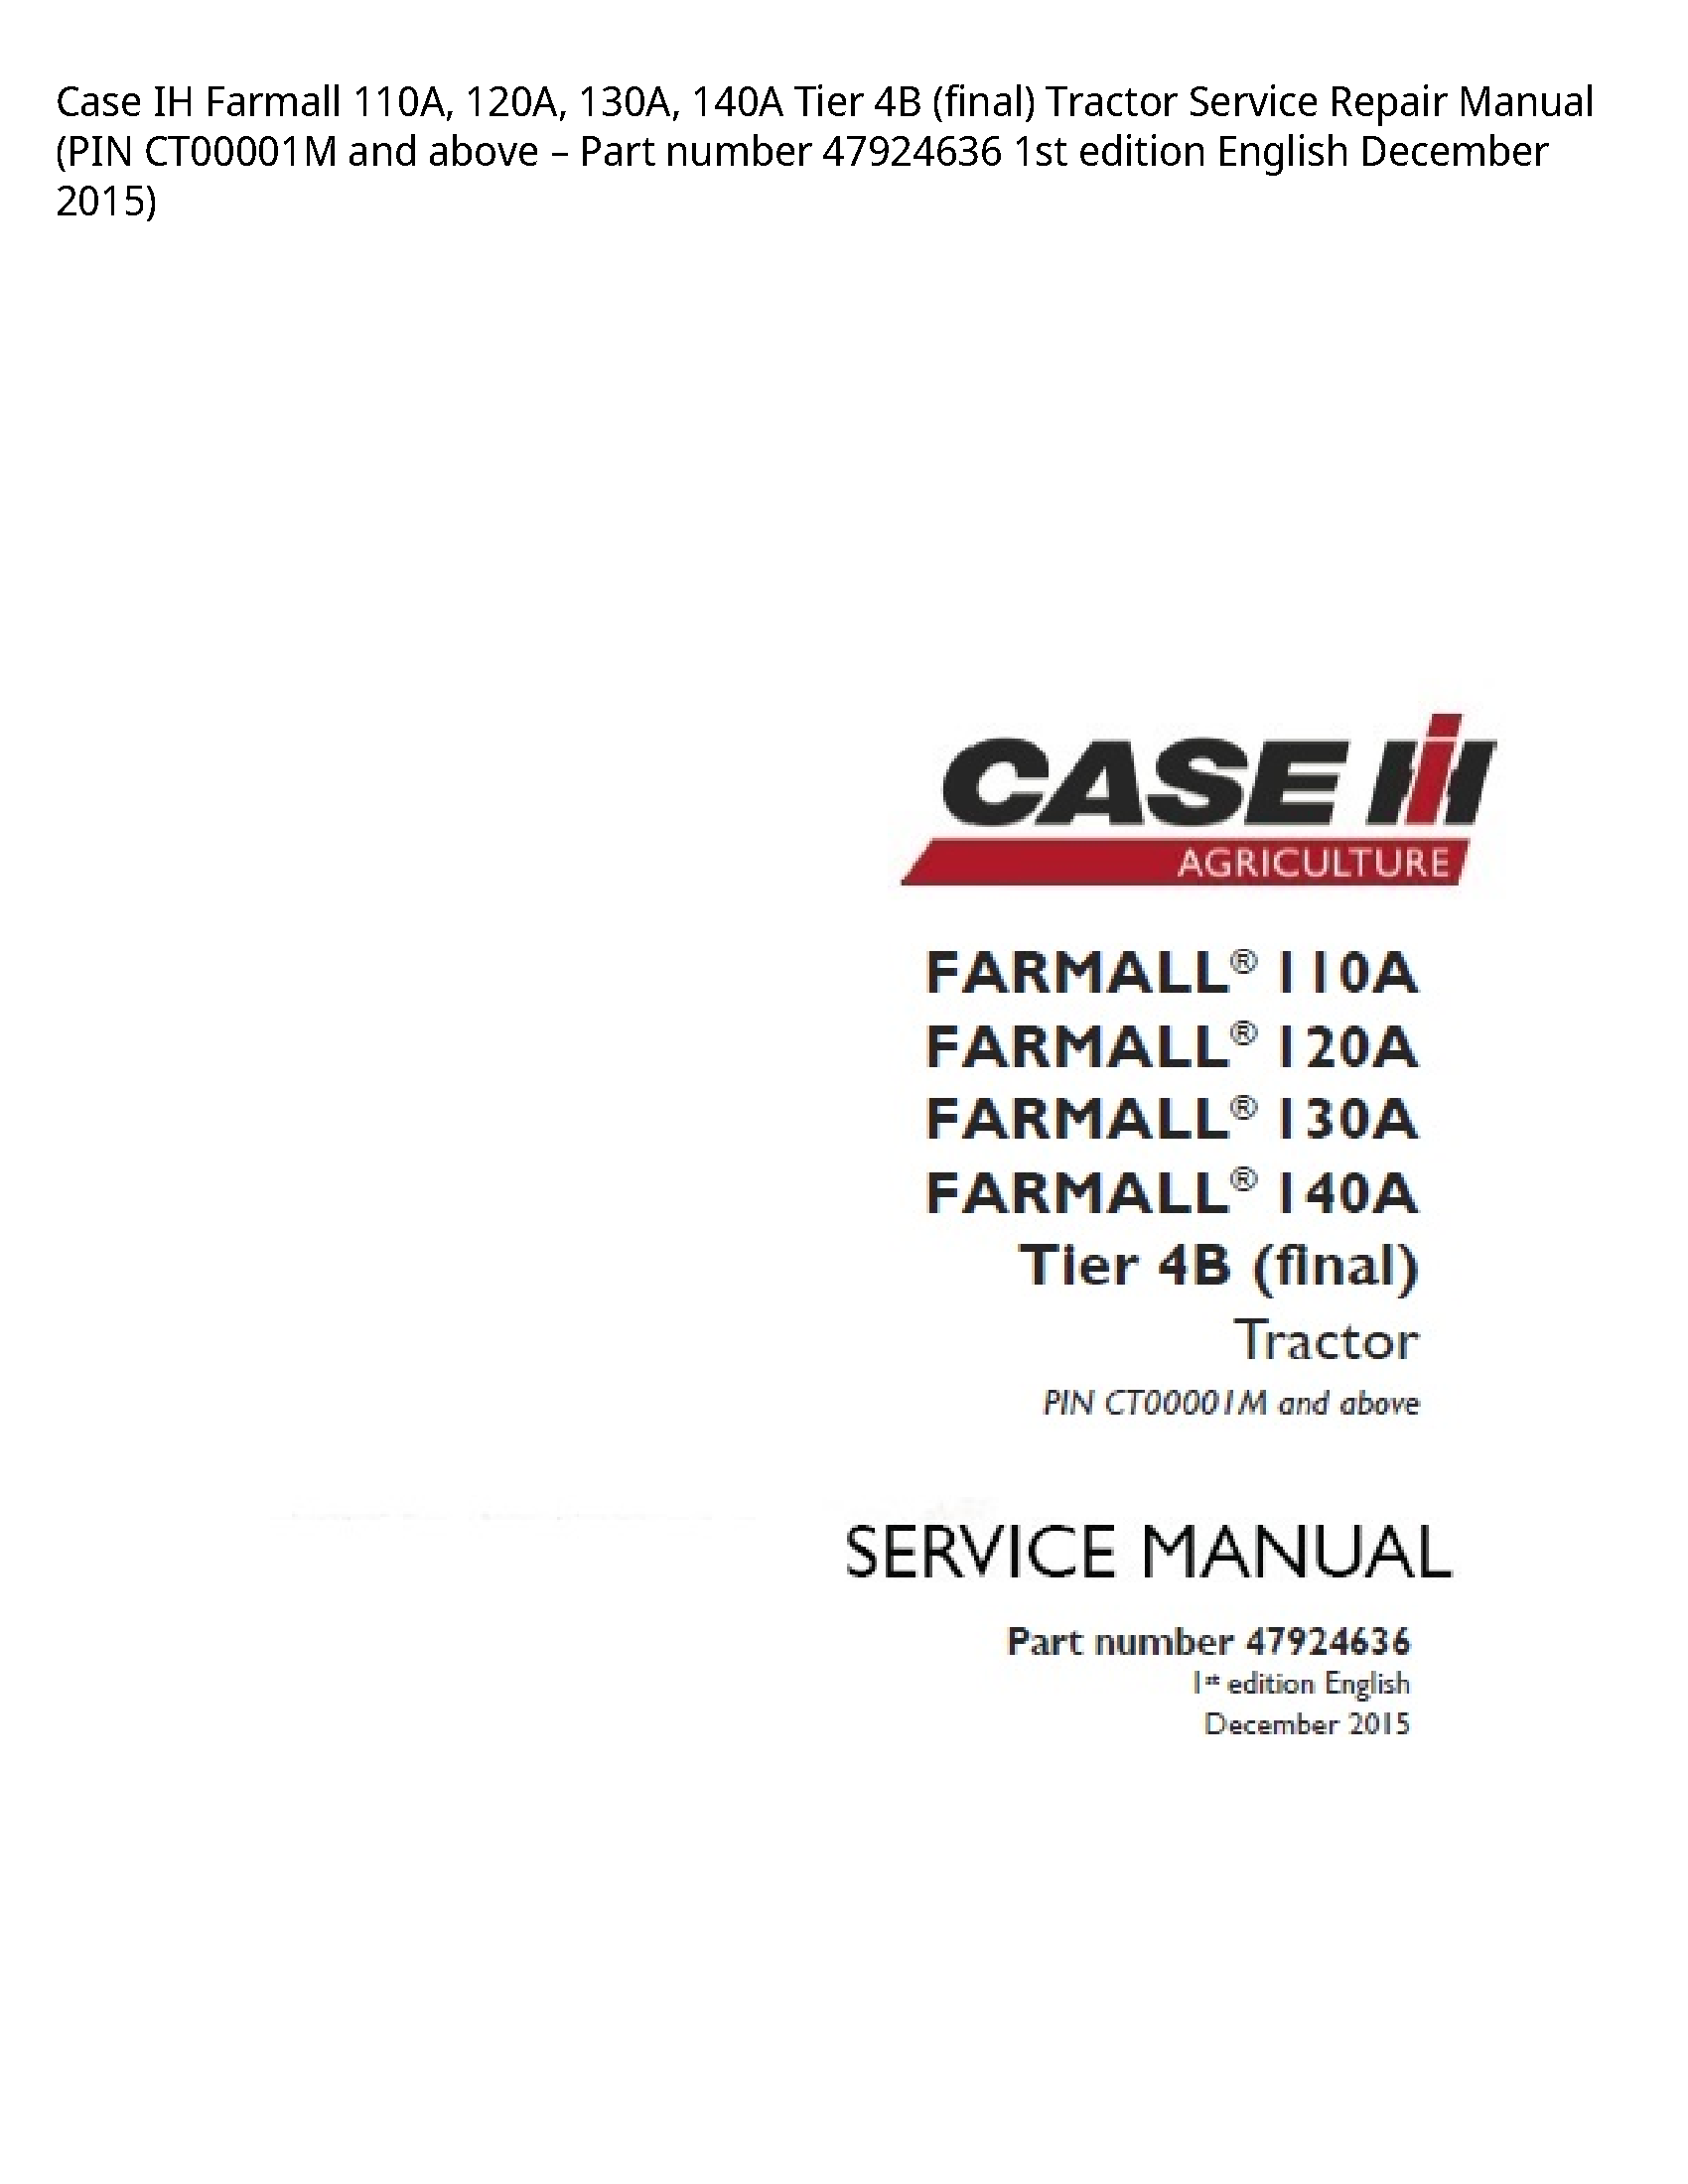 Case/Case IH 110A IH Farmall Tier (final) Tractor manual